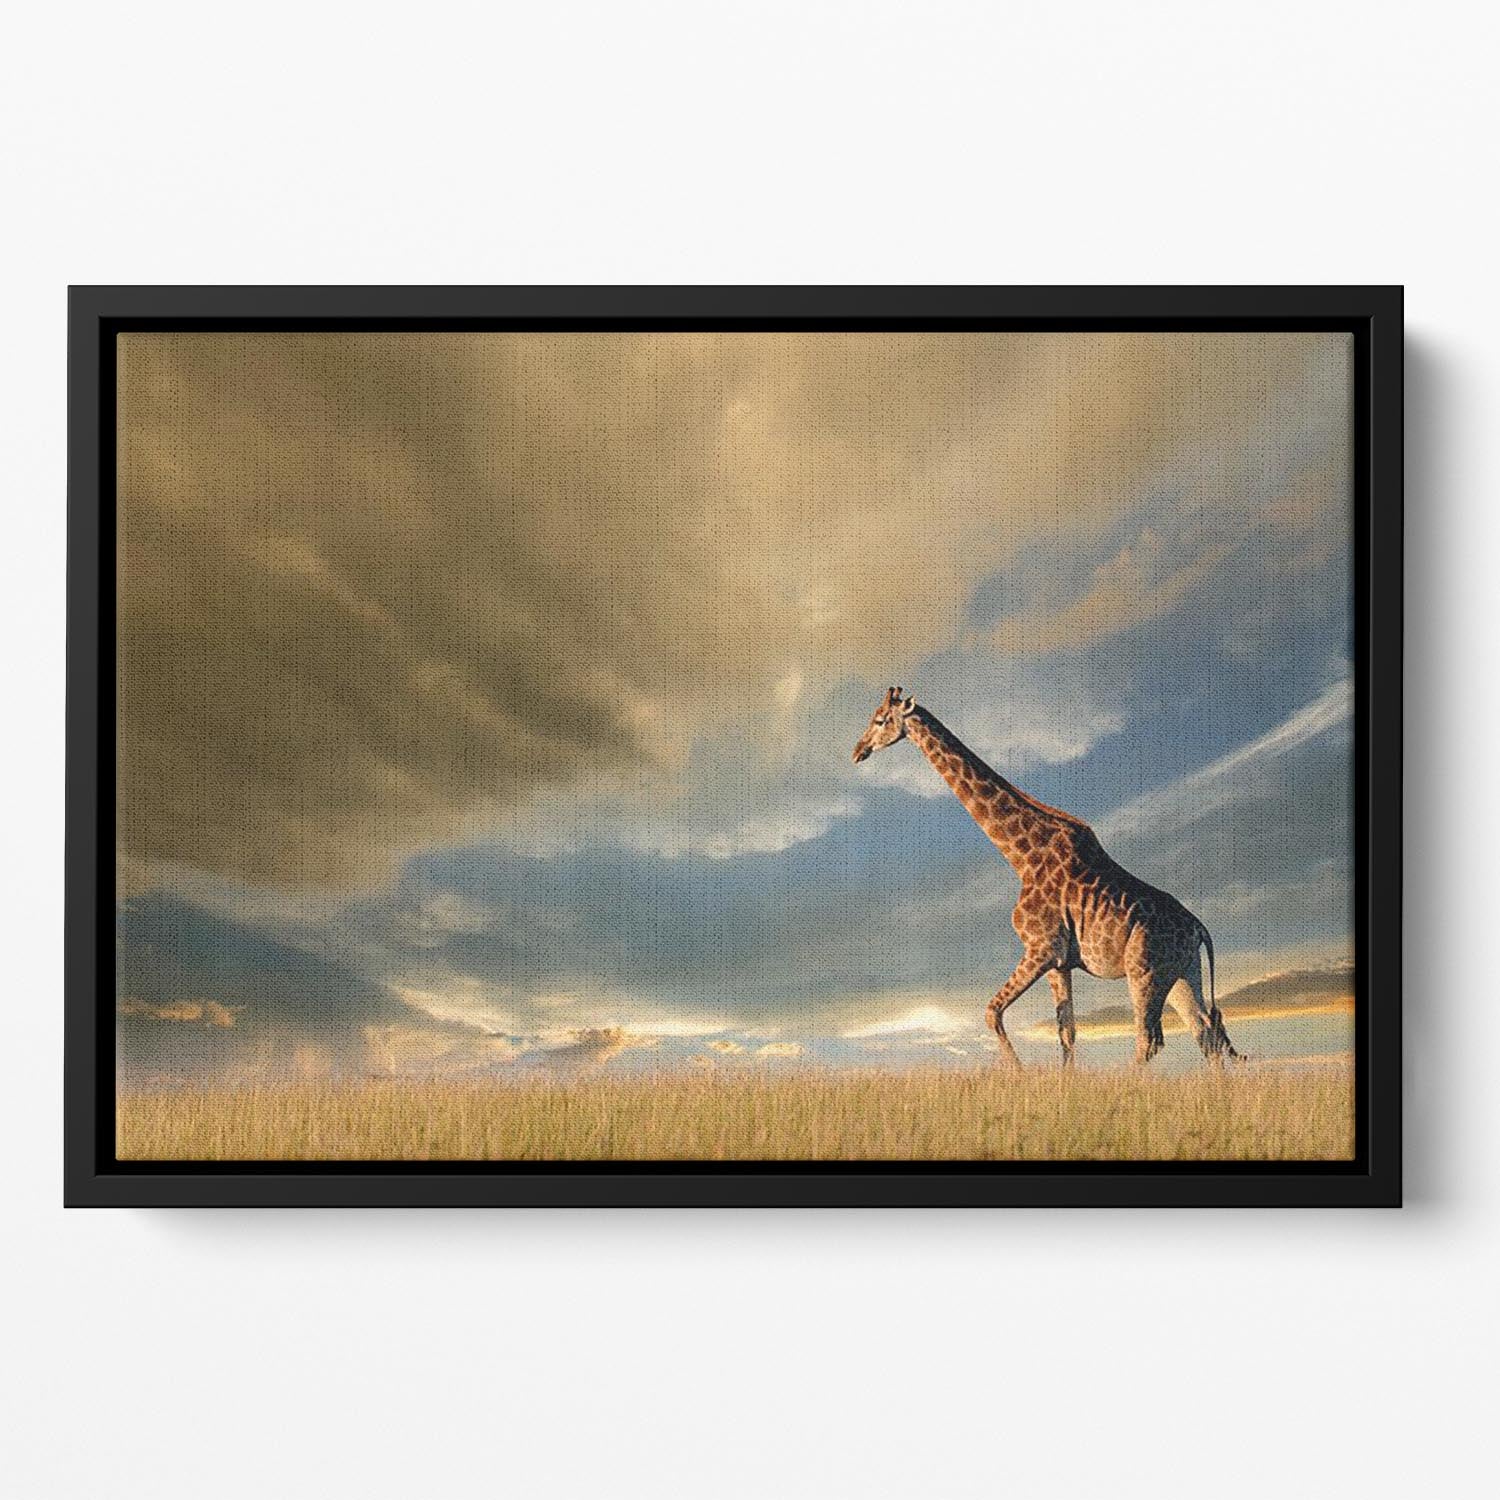 A giraffe walking on the African plains against a dramatic sky Floating Framed Canvas - Canvas Art Rocks - 2